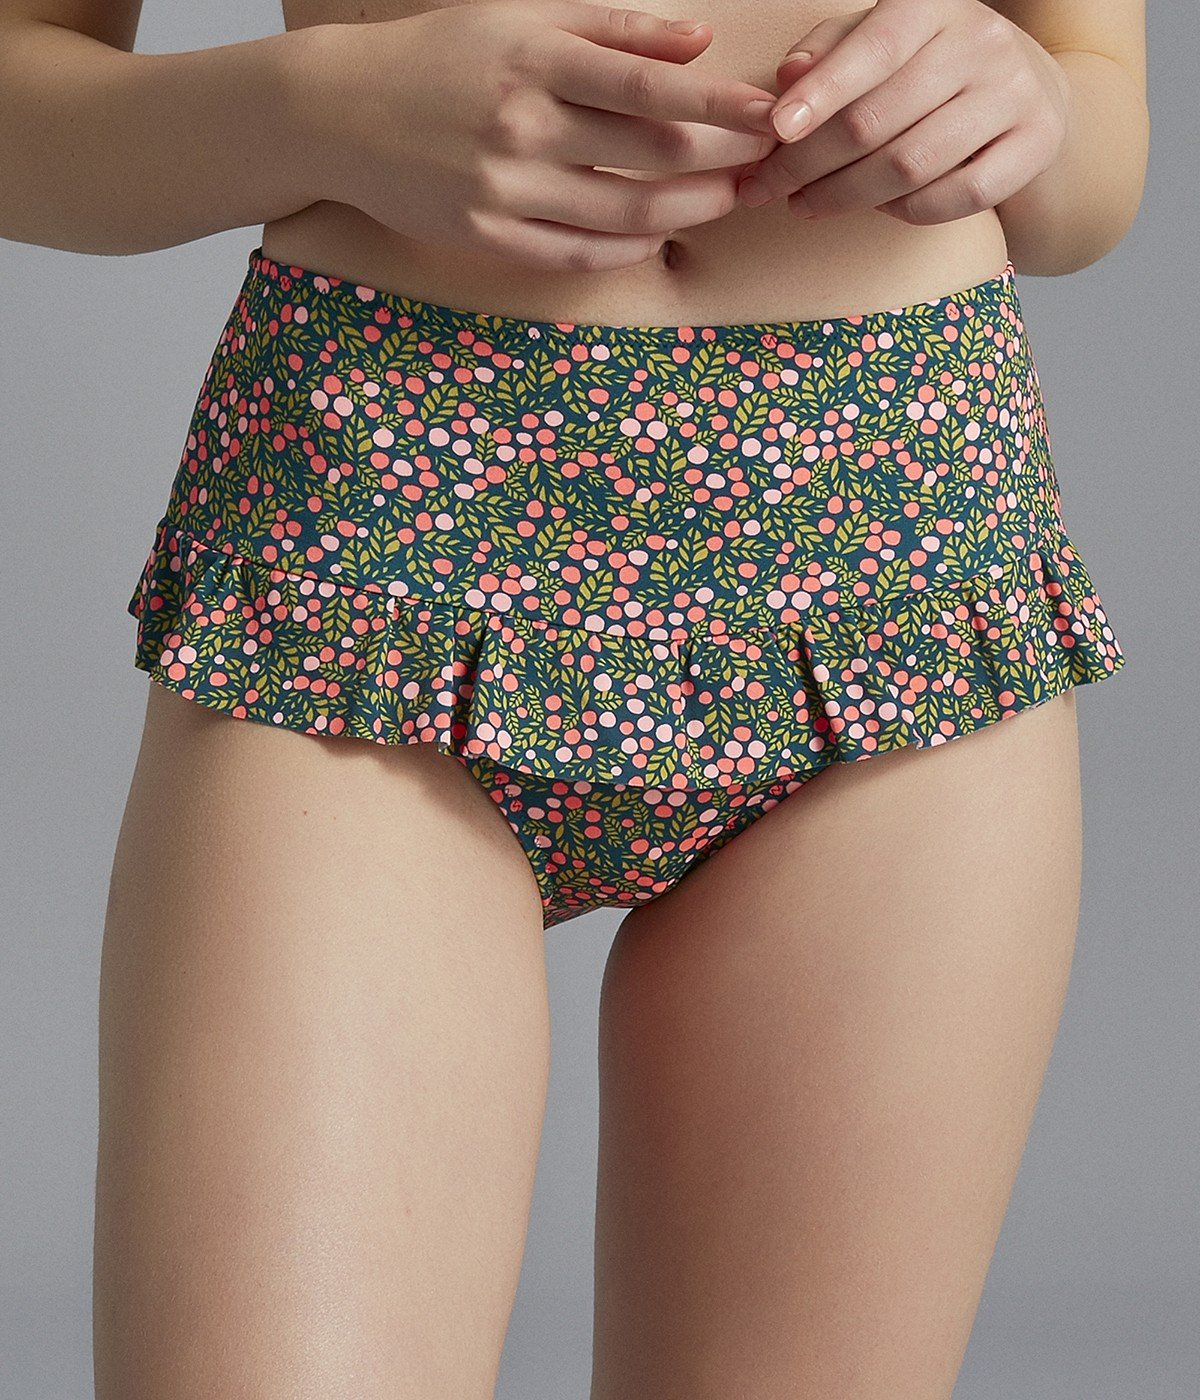 Carina Ruffle Skirtkini Bikini Bottom